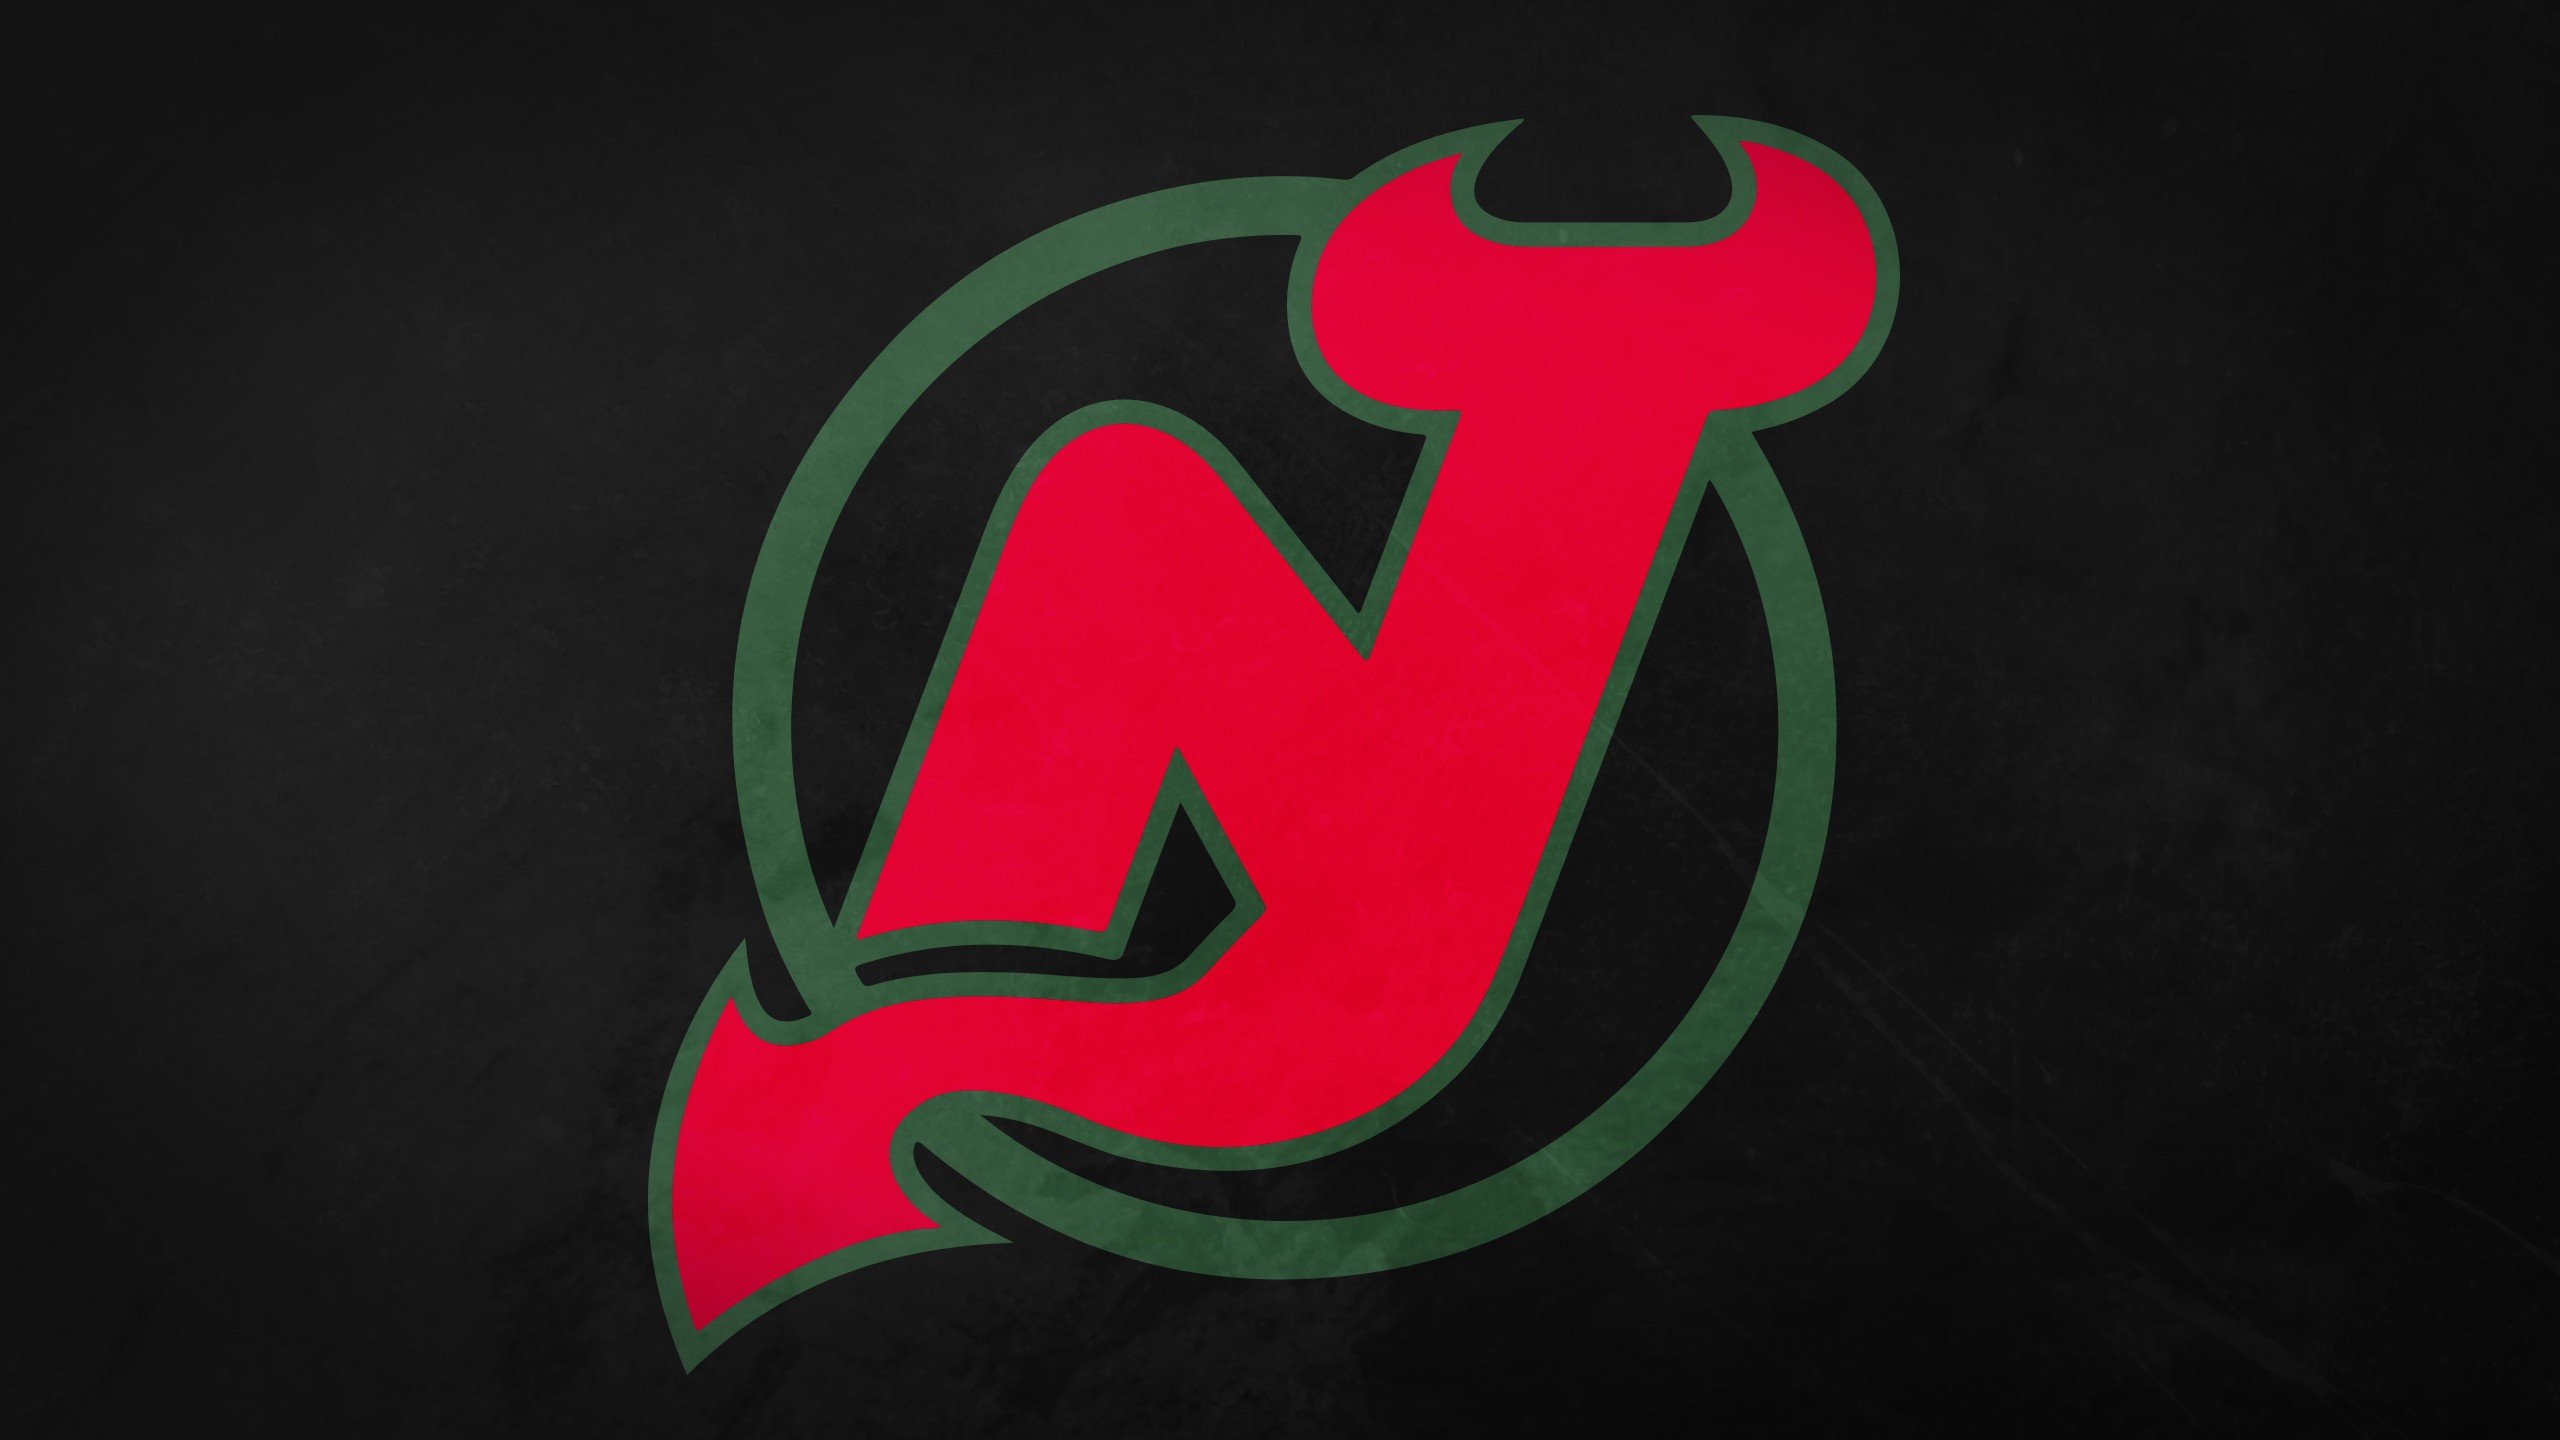 New jersey devils. Нью джерси Девилз лого. Нью Девилс джерси Девилз. Нью джерси Девилз логотип 2. New Jersey Devils логотип.